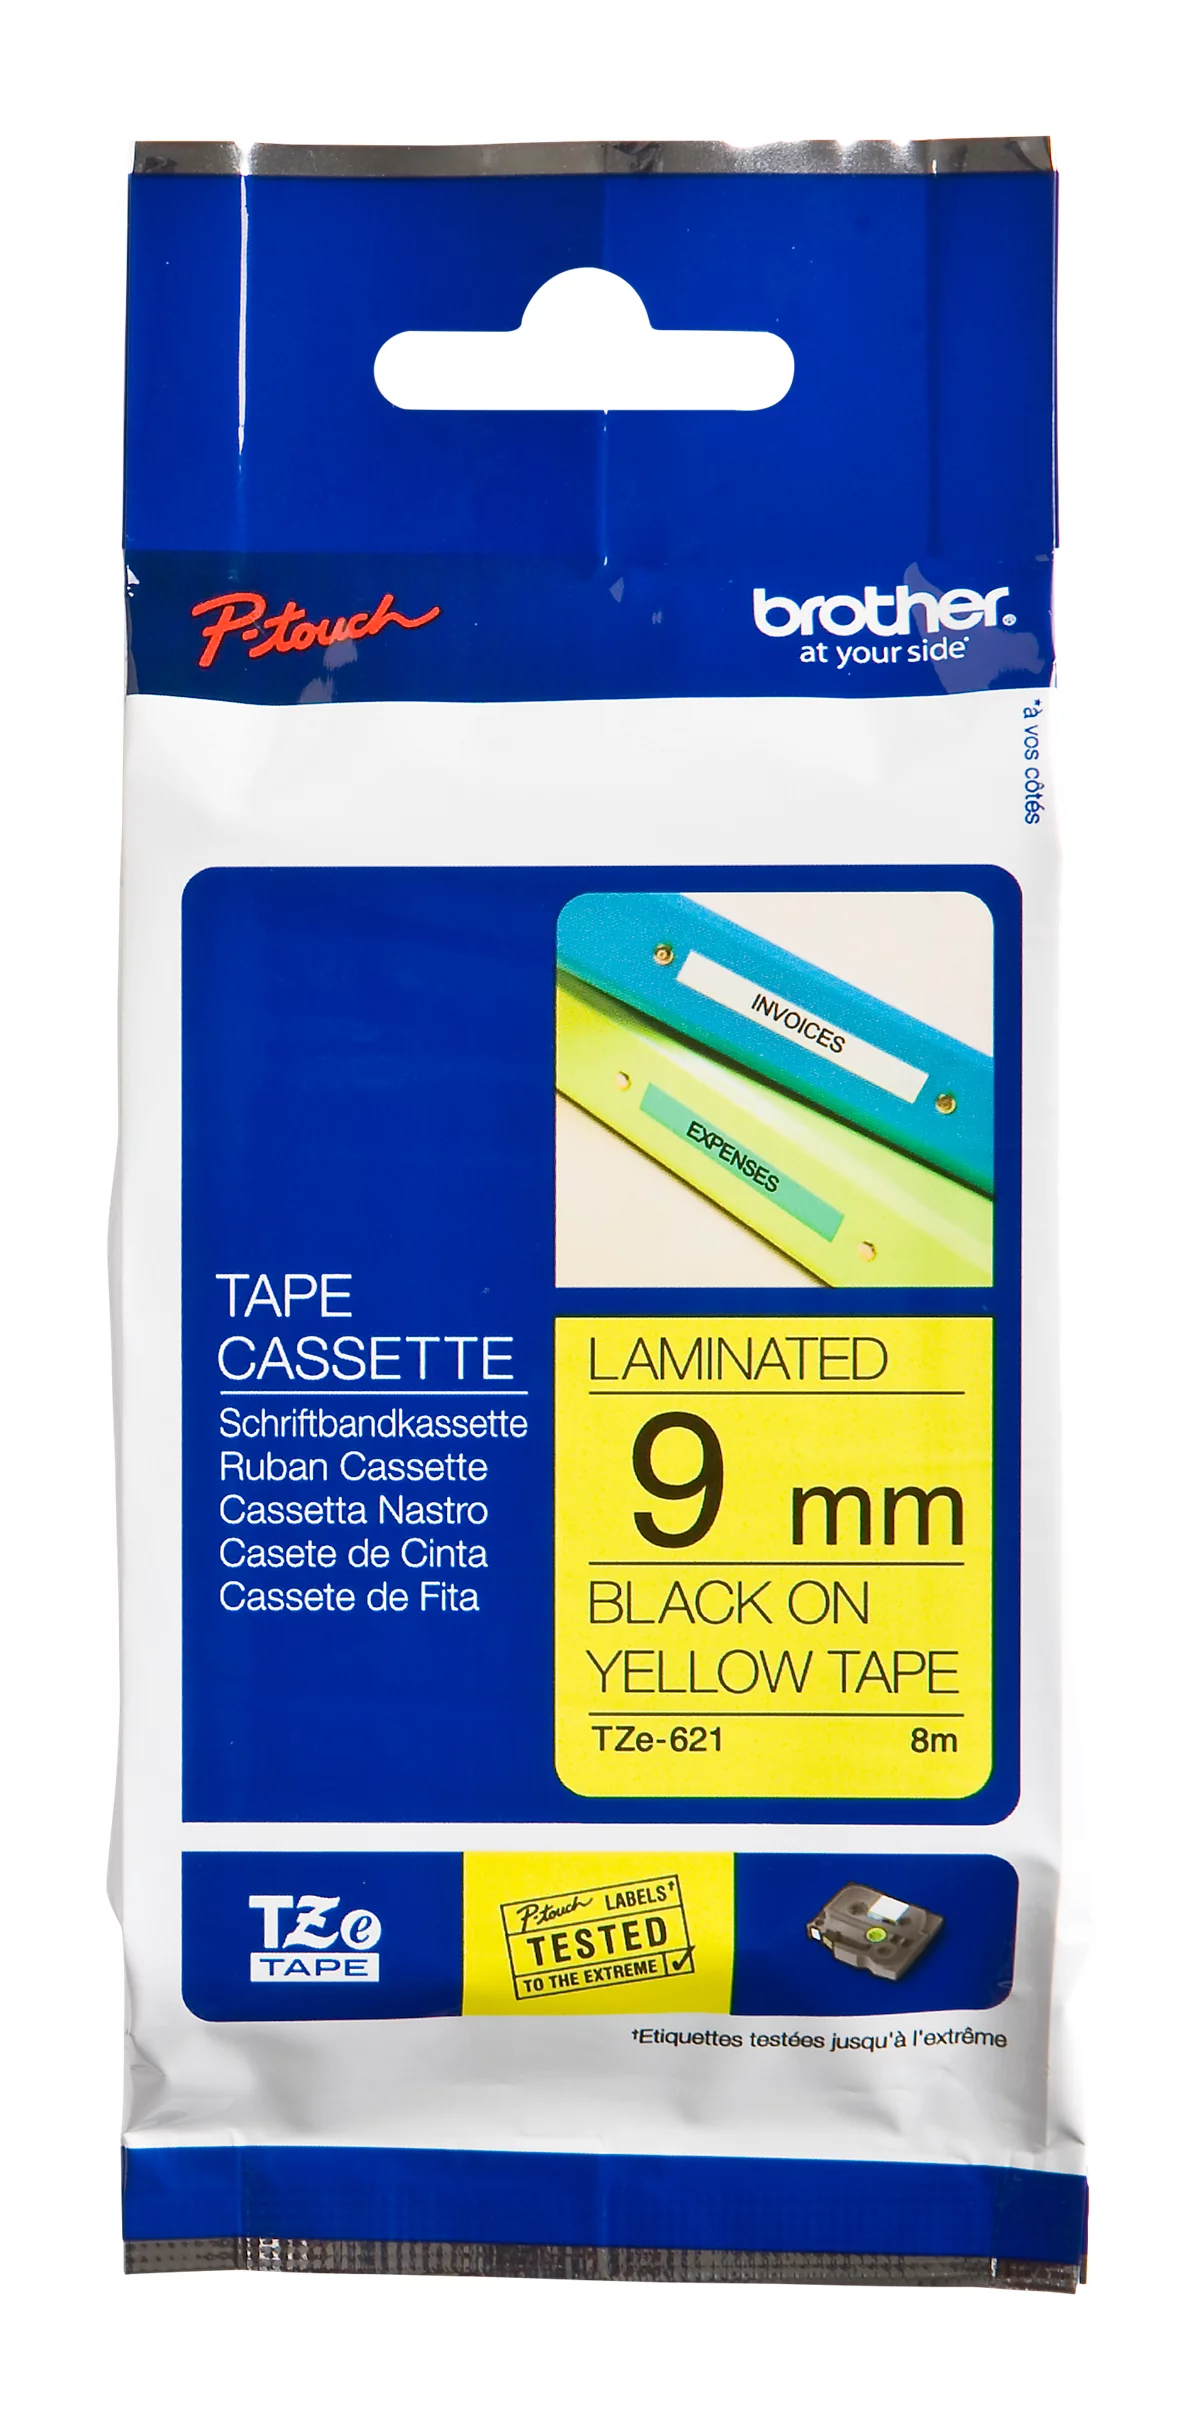 Casete de cinta de escritura Brother TZe-621, autoadhesivo, L 8 m x A 9 mm, amarillo/negro